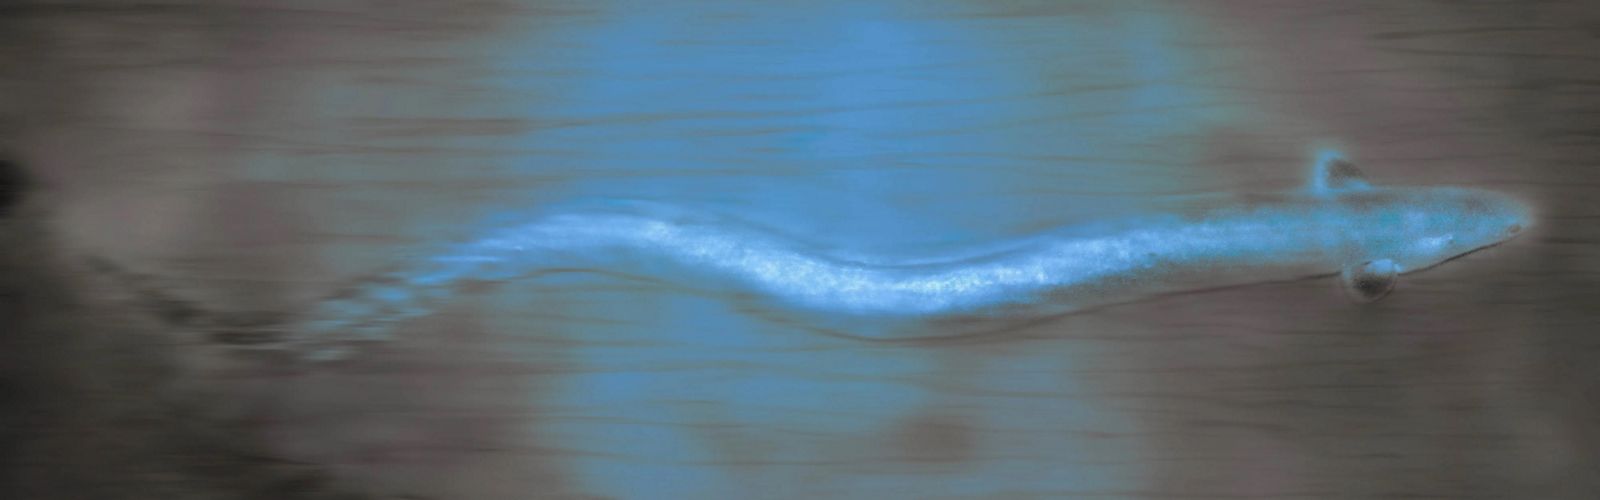 Eel with large black eyes seen blurred in water.